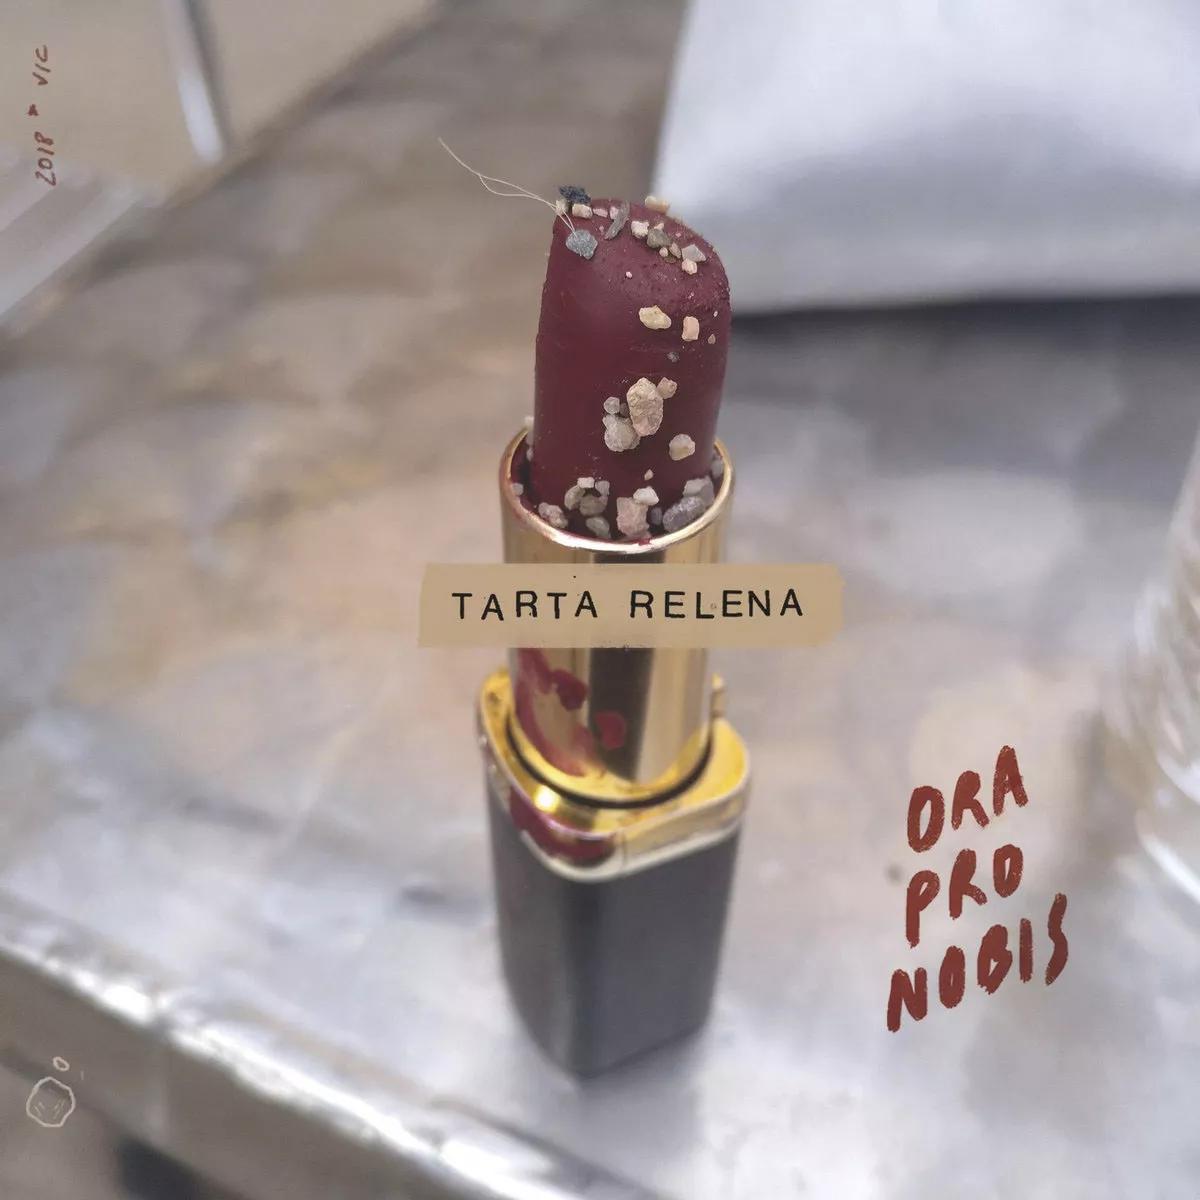 Tarta Relena - Ora pro nobis (2019)